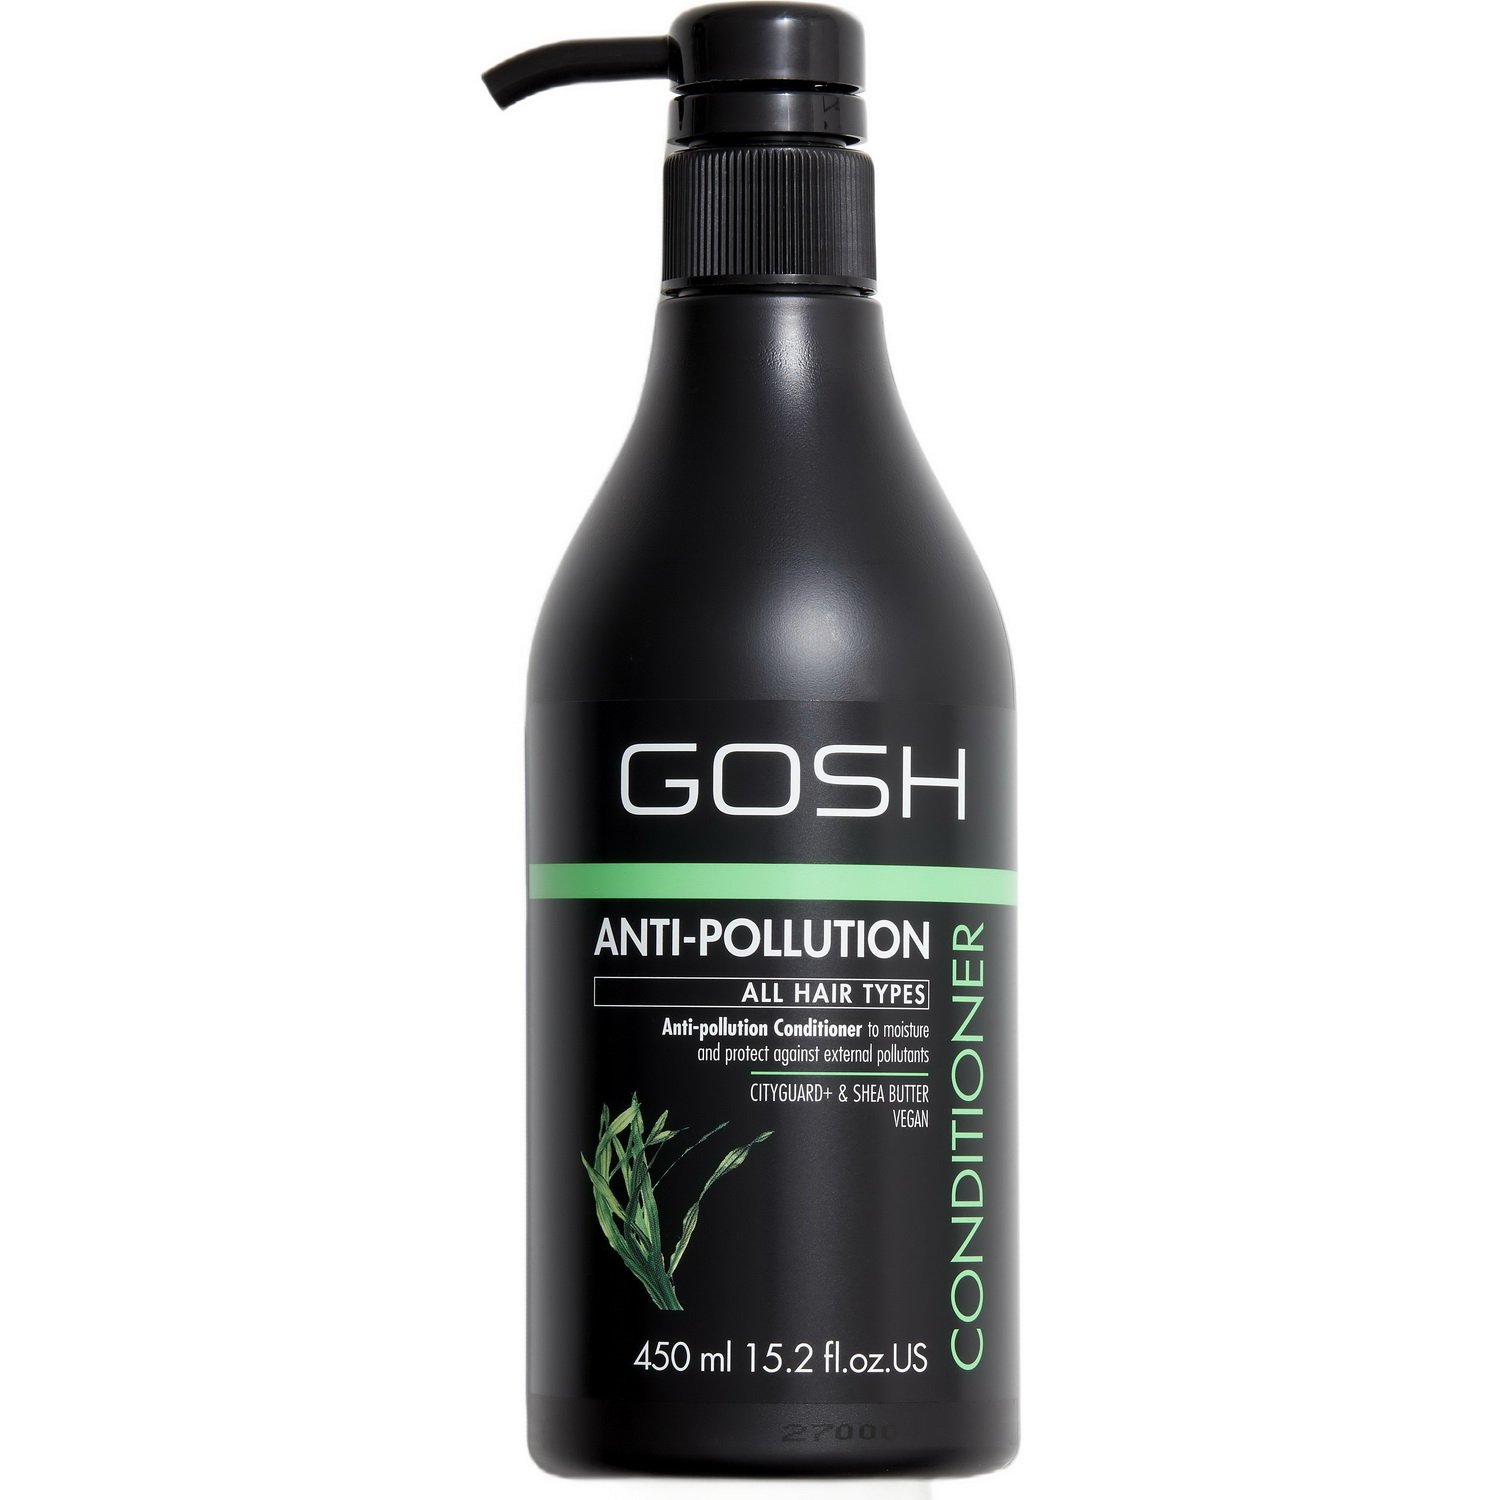 Кондиционер для волос Gosh Anti-Pollution, для всех типов волос, 450 мл - фото 1